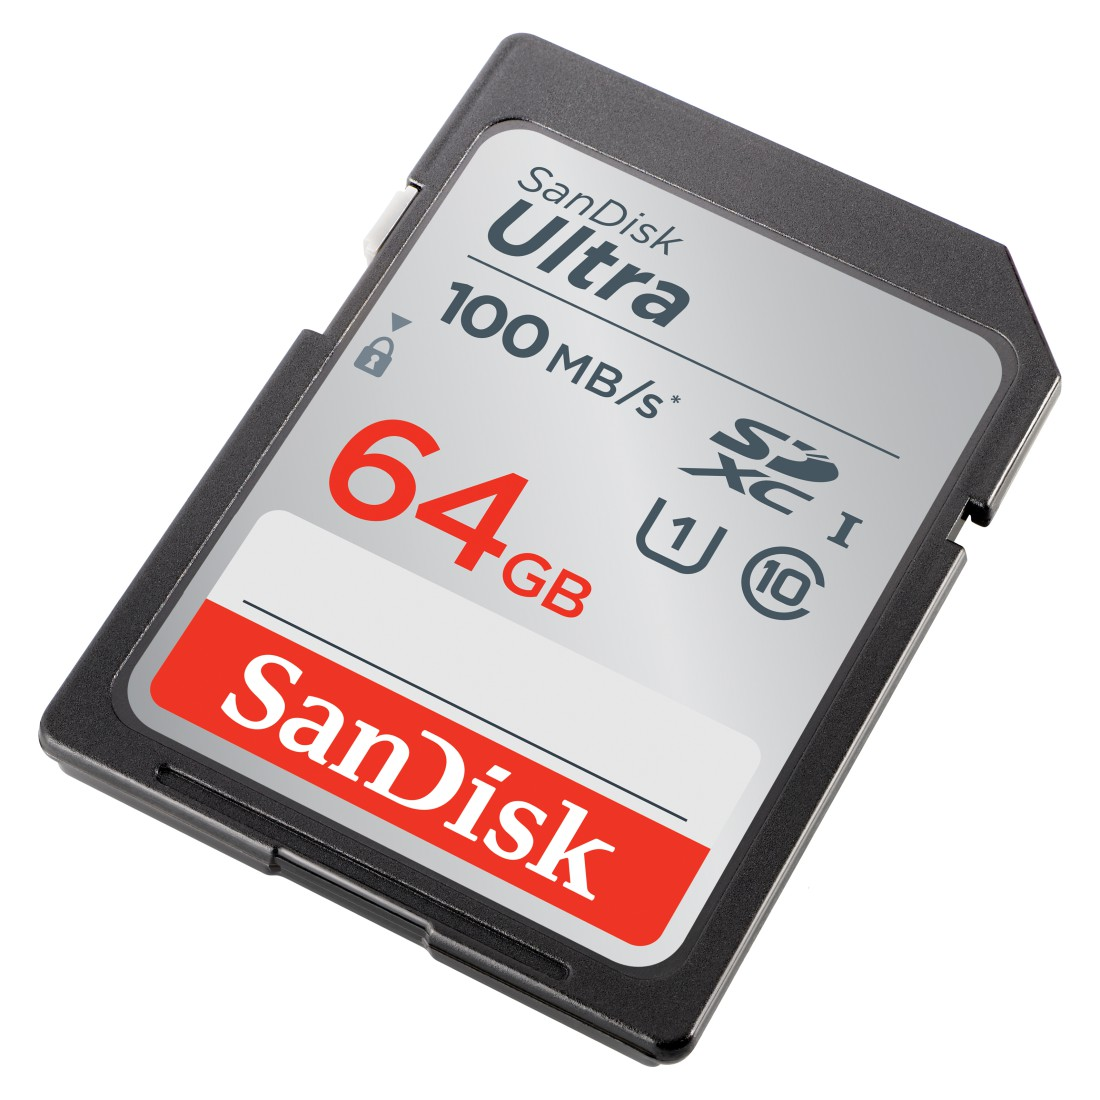 SANDISK Ultra, 100 64 MB/s GB, SDXC Speicherkarte